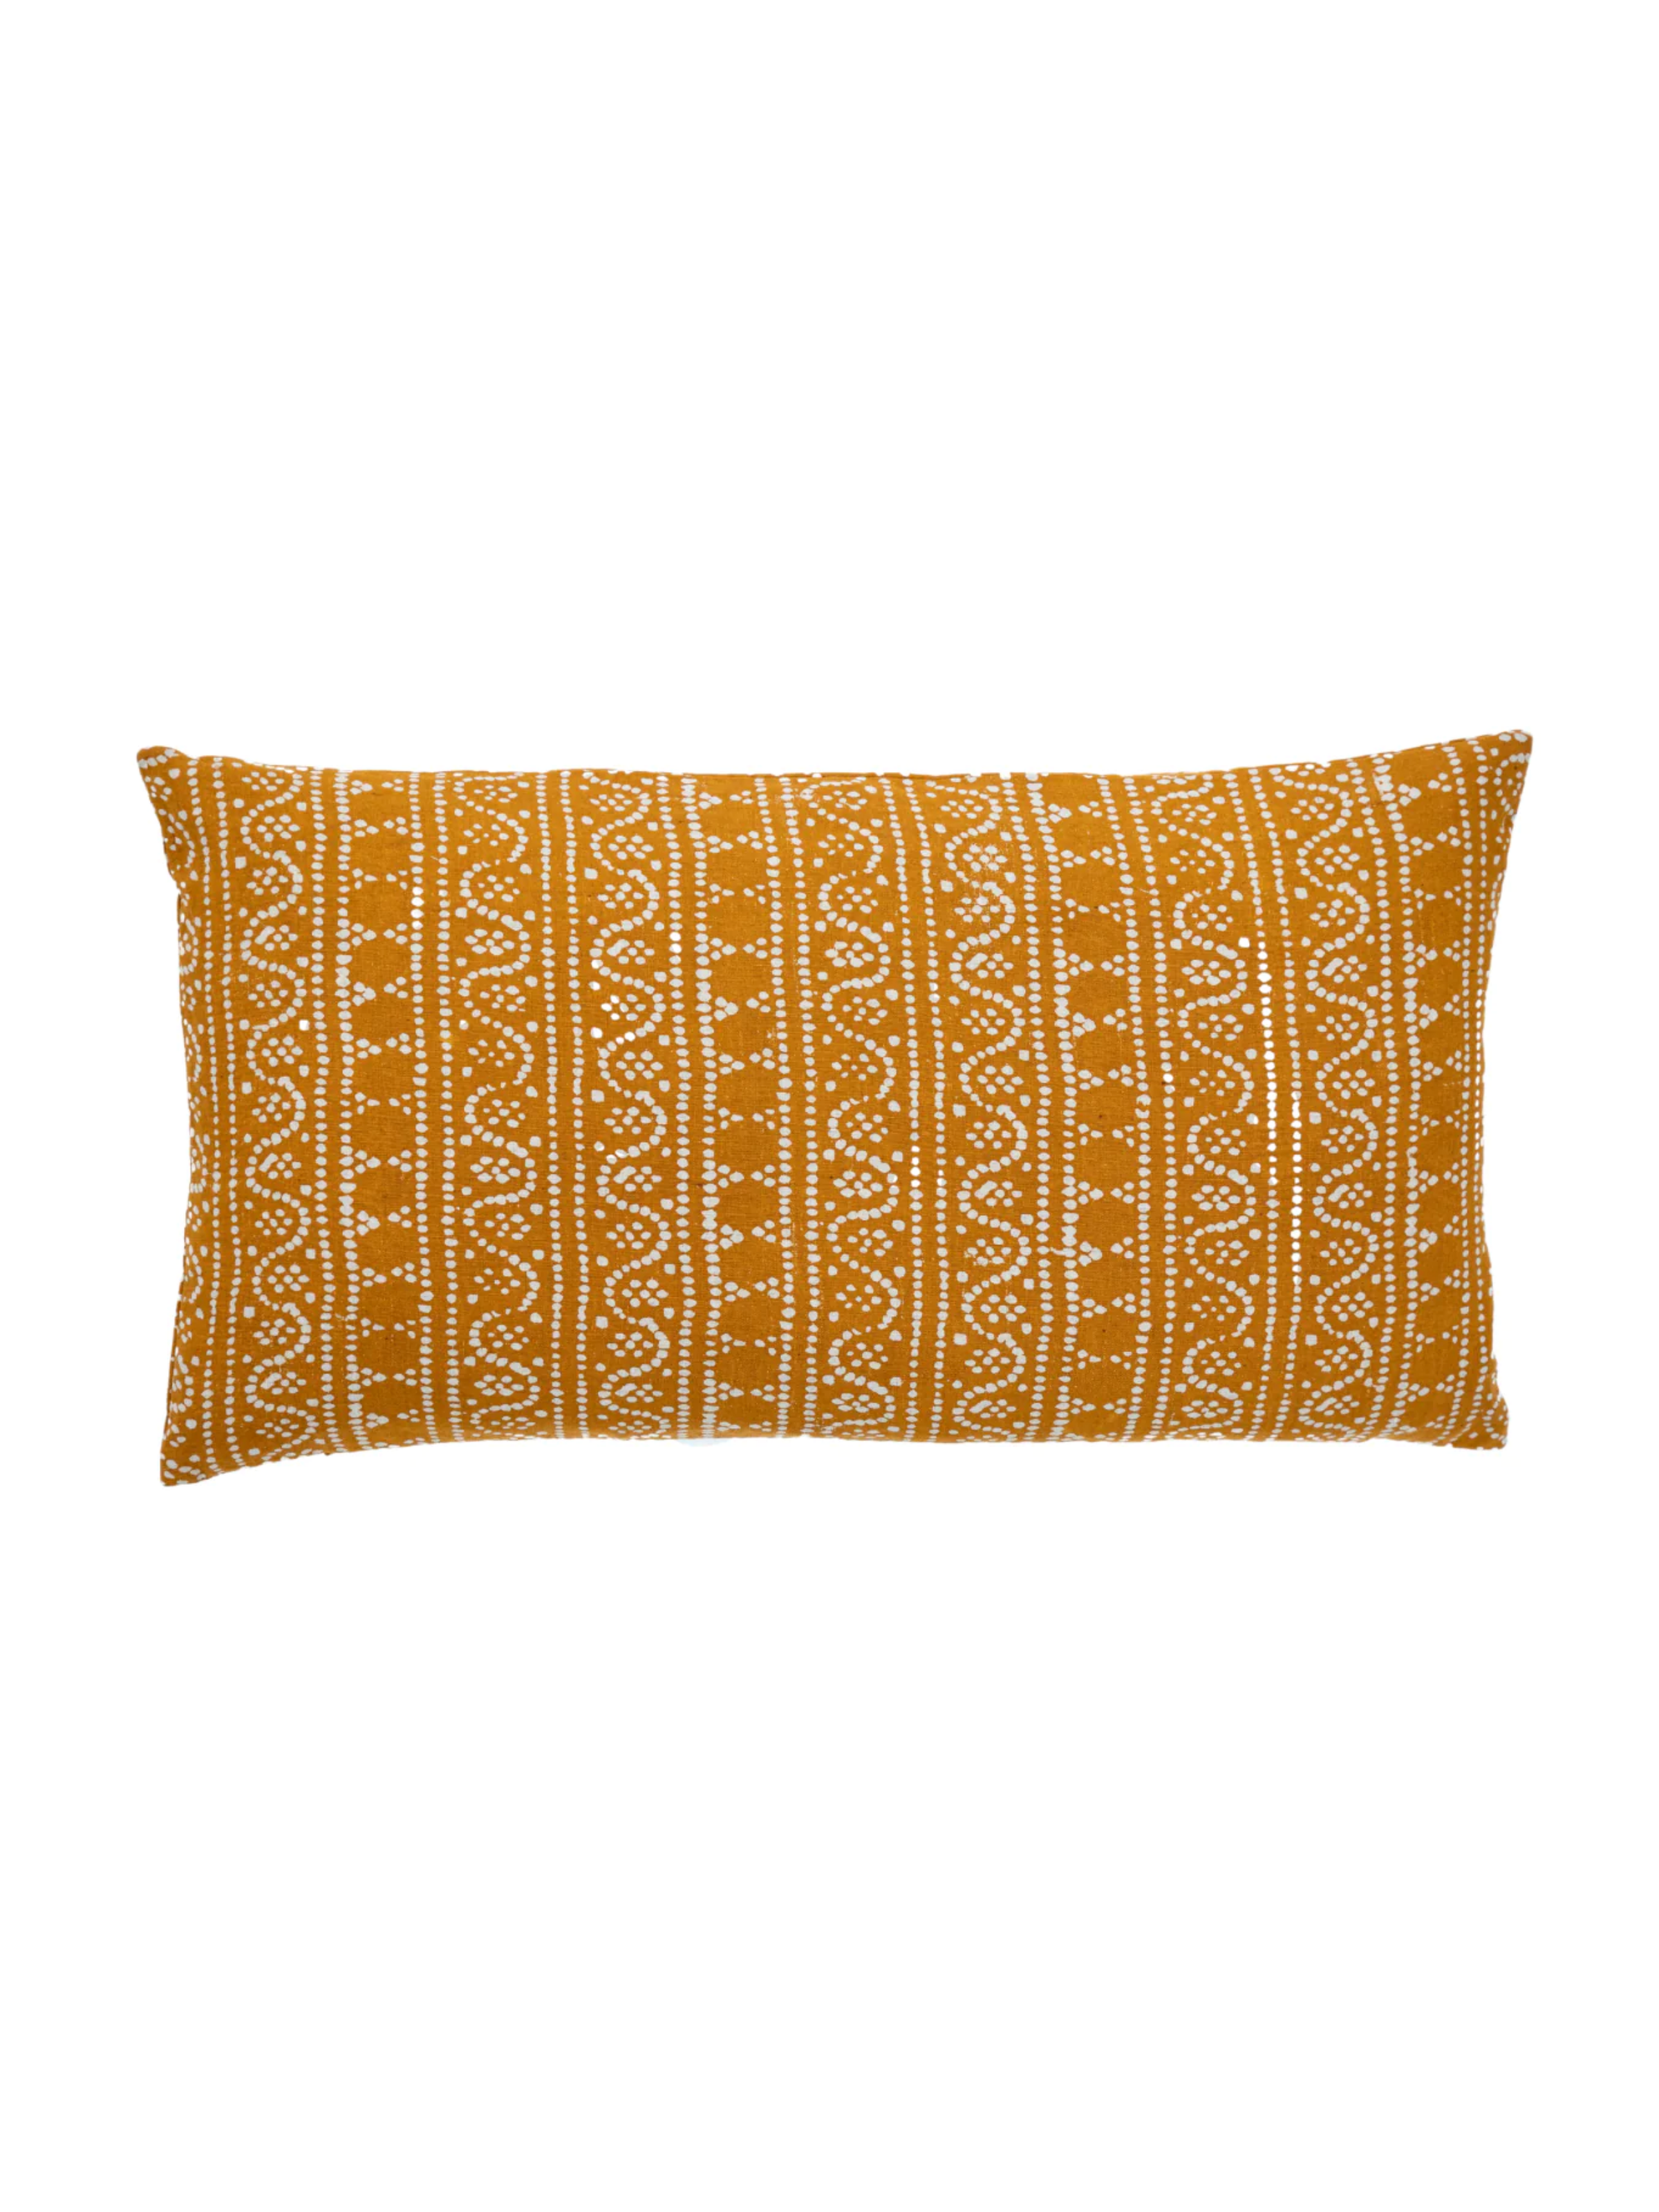 Sumatra Ochre Lumbar Pillow Cover